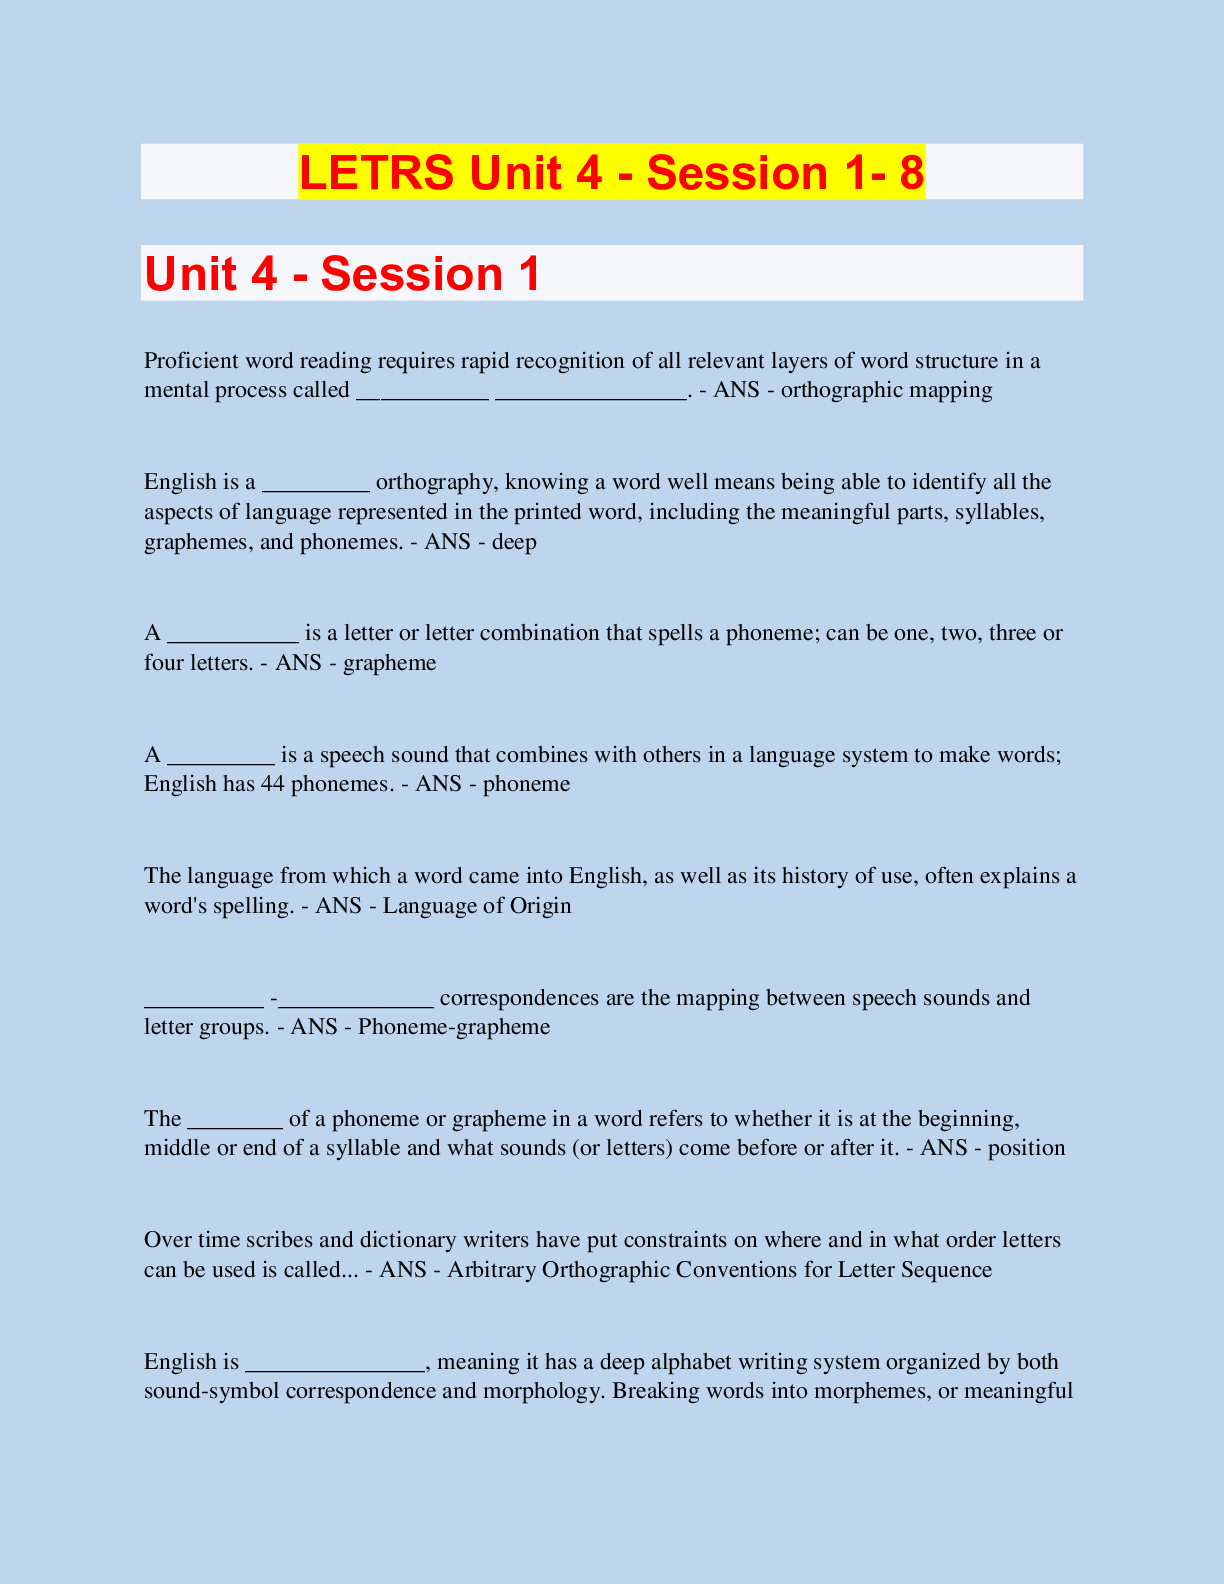 LETRS Unit 4 Session 1 8 Verified 100 Correct Answers